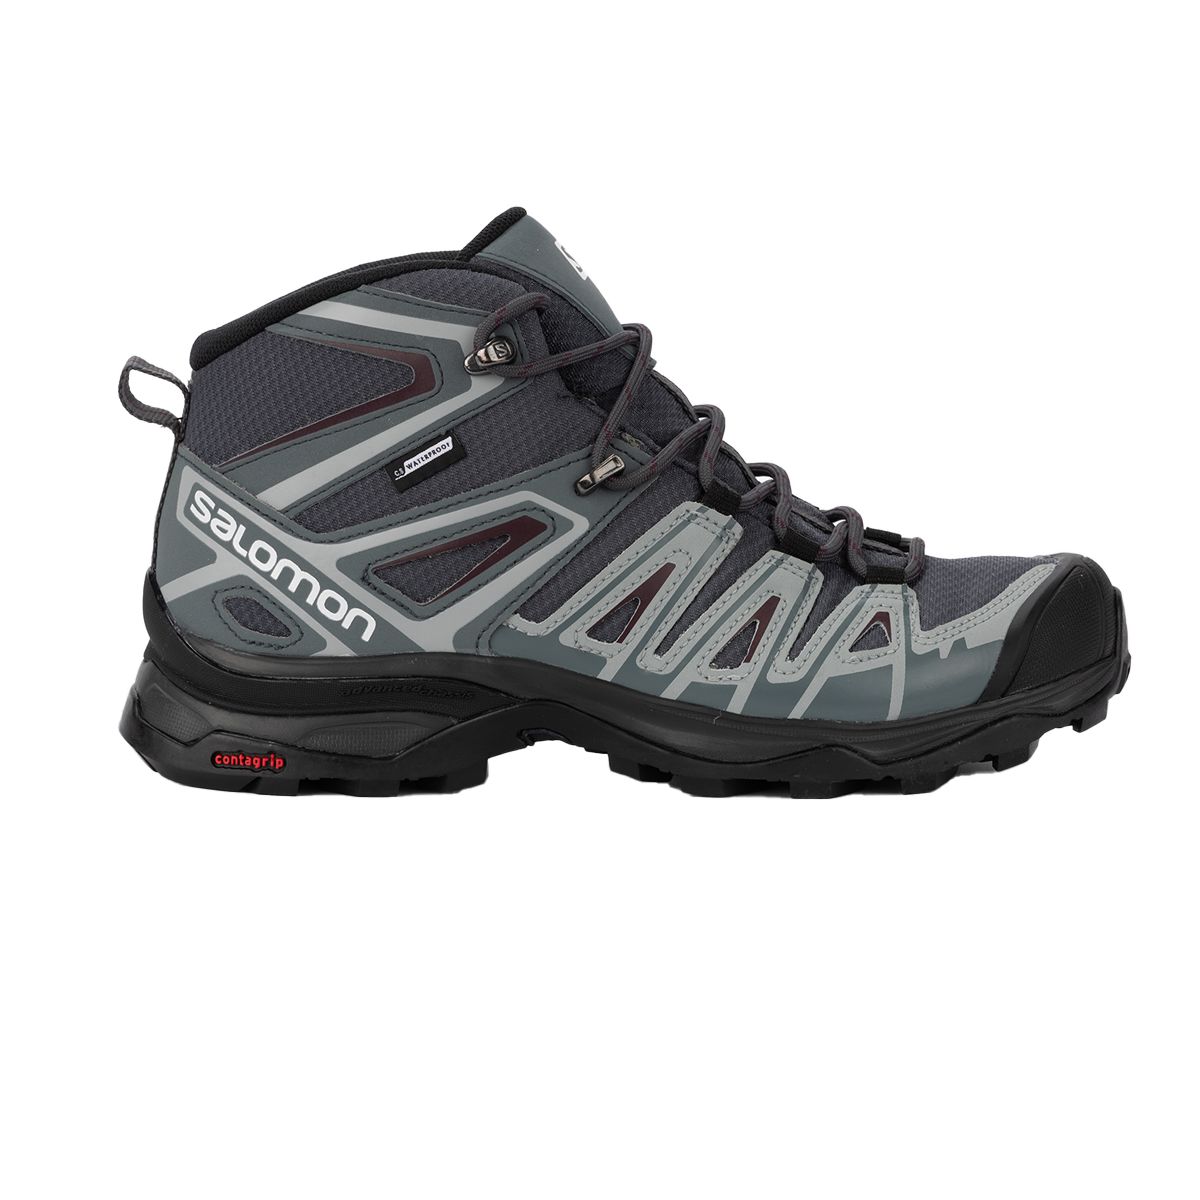 Salomon Women's Ultra Pioneer Hiking Boots Waterproof